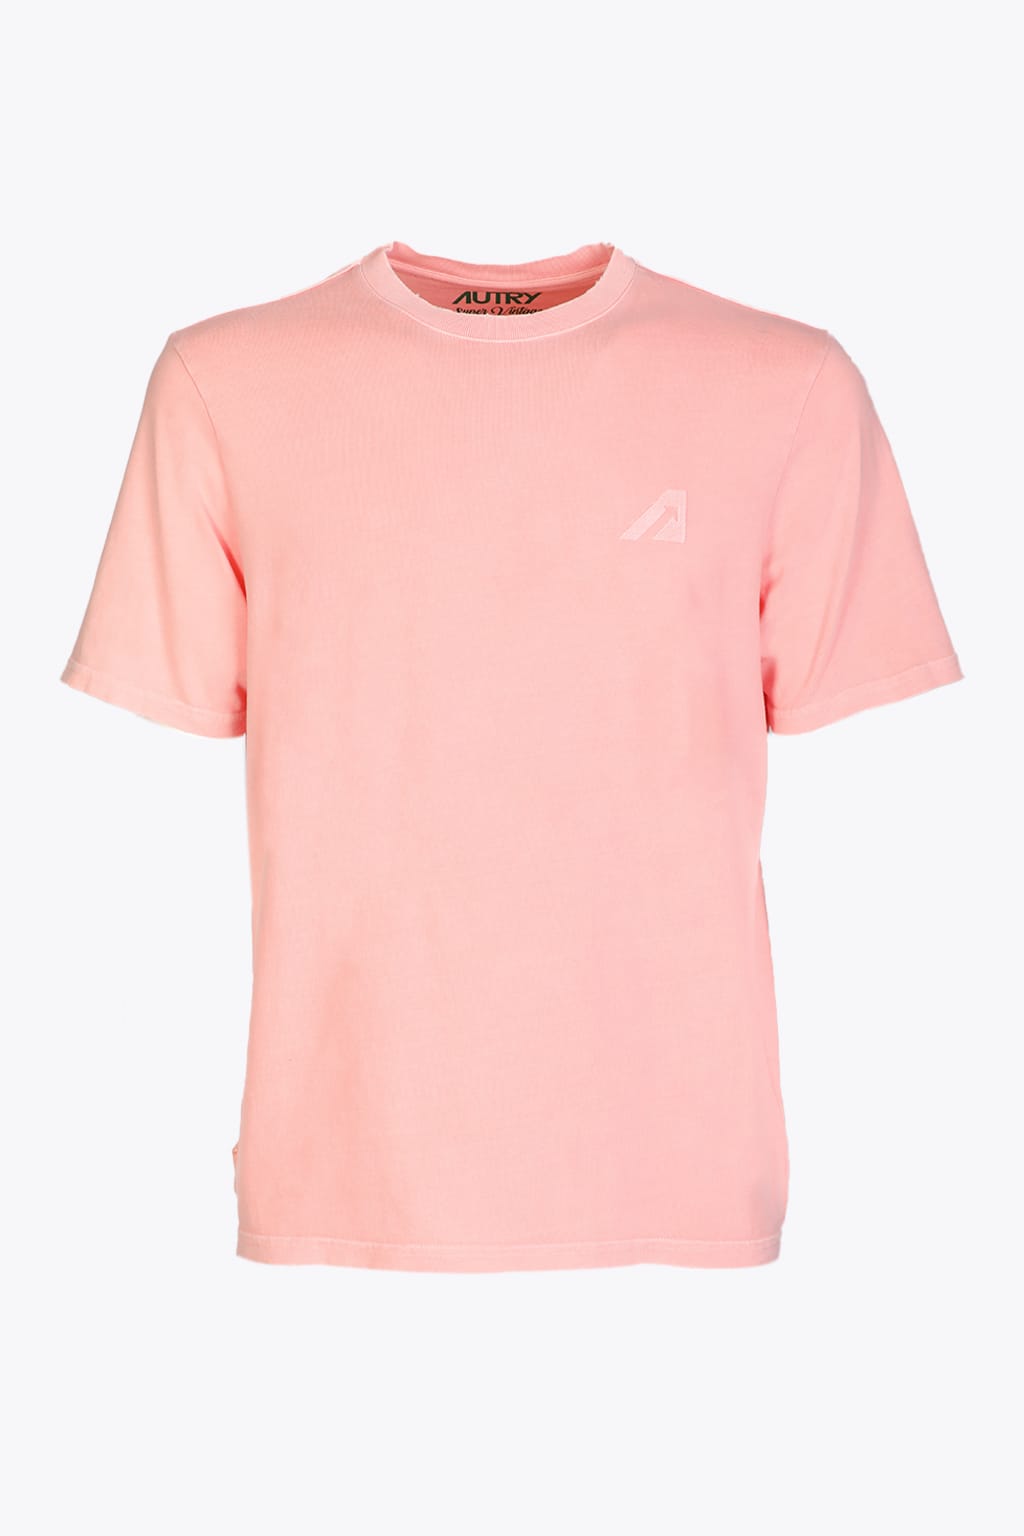 Autry T-shirt Supervintage Man Tinto Pink Pink Cotton Garment Dyed T-shirt